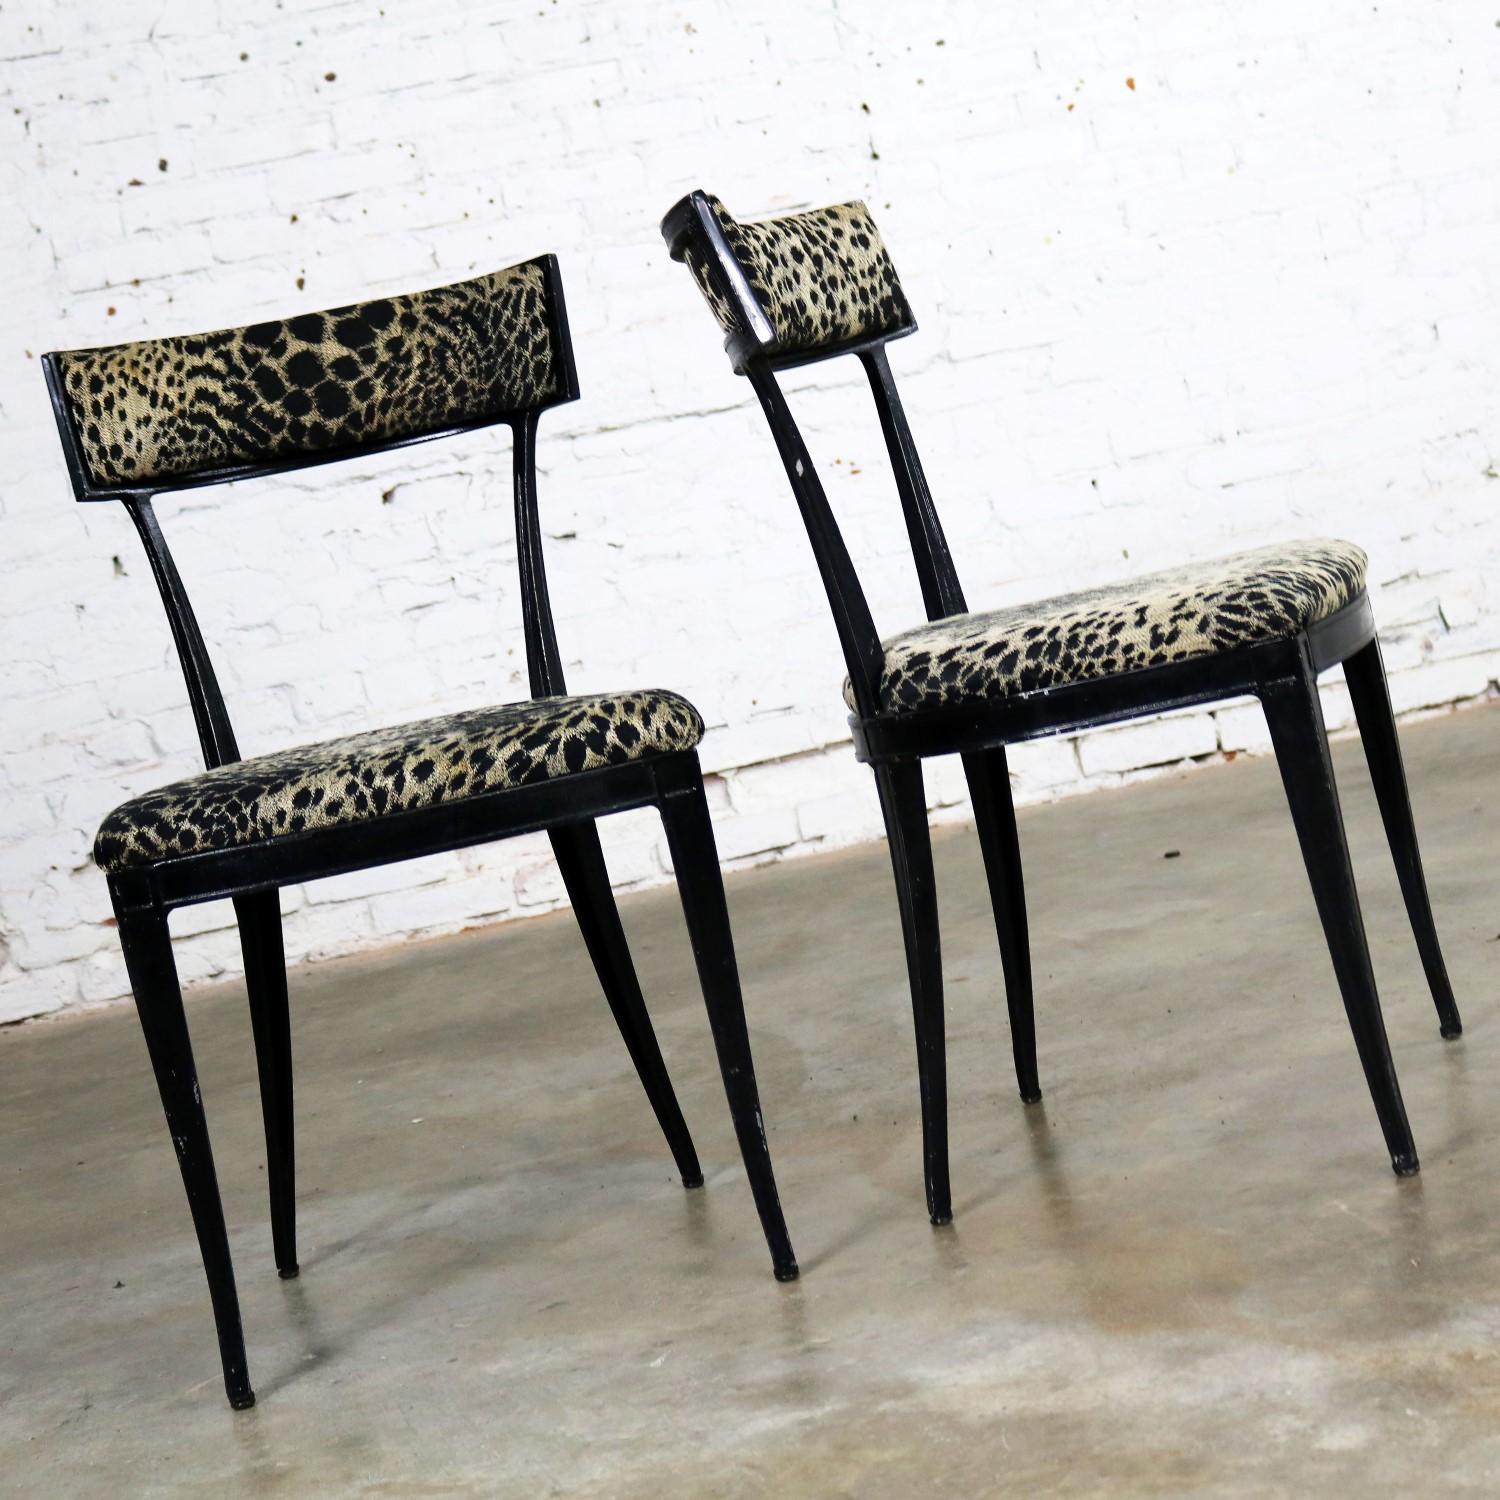 20th Century Black Art Deco & Animal Print Side Chairs Cast Aluminium Crucible Products, Pair